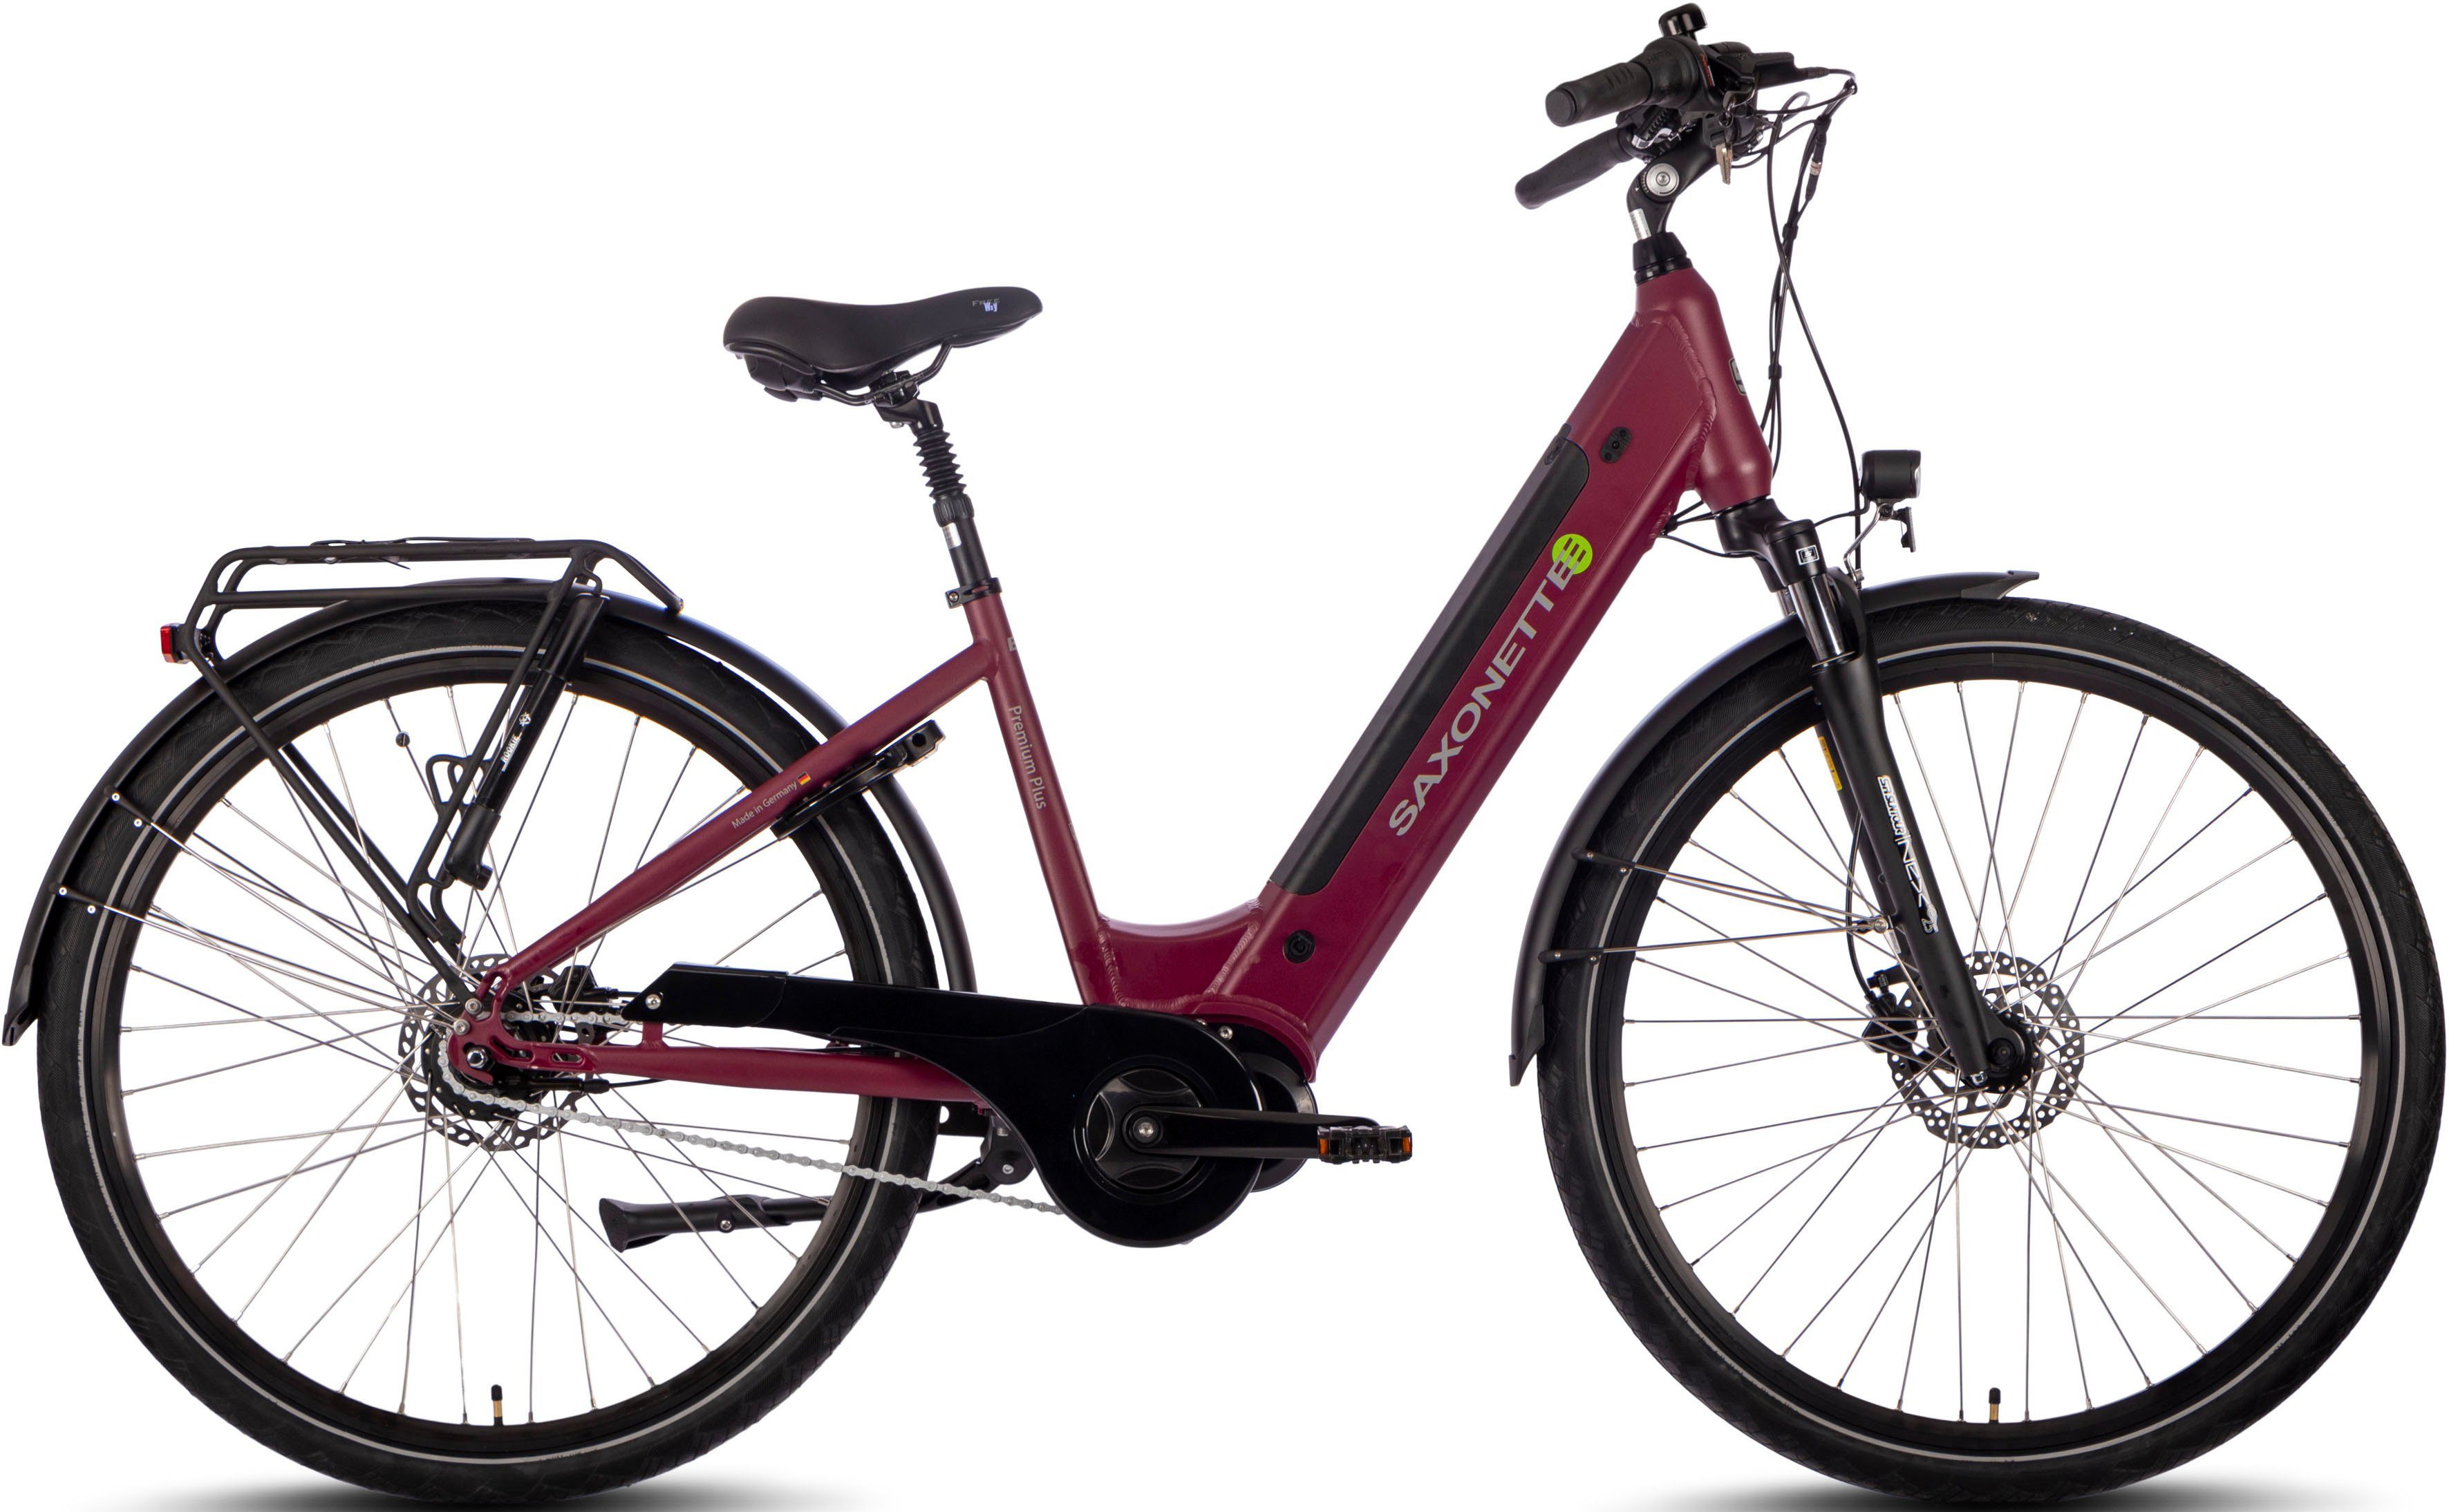 SAXONETTE E-Bike Premium Plus 3.0, 8 Gang, Nabenschaltung, Mittelmotor, 522 Wh Akku, Pedelec, Elektrofahrrad für Damen u. Herren, Cityrad